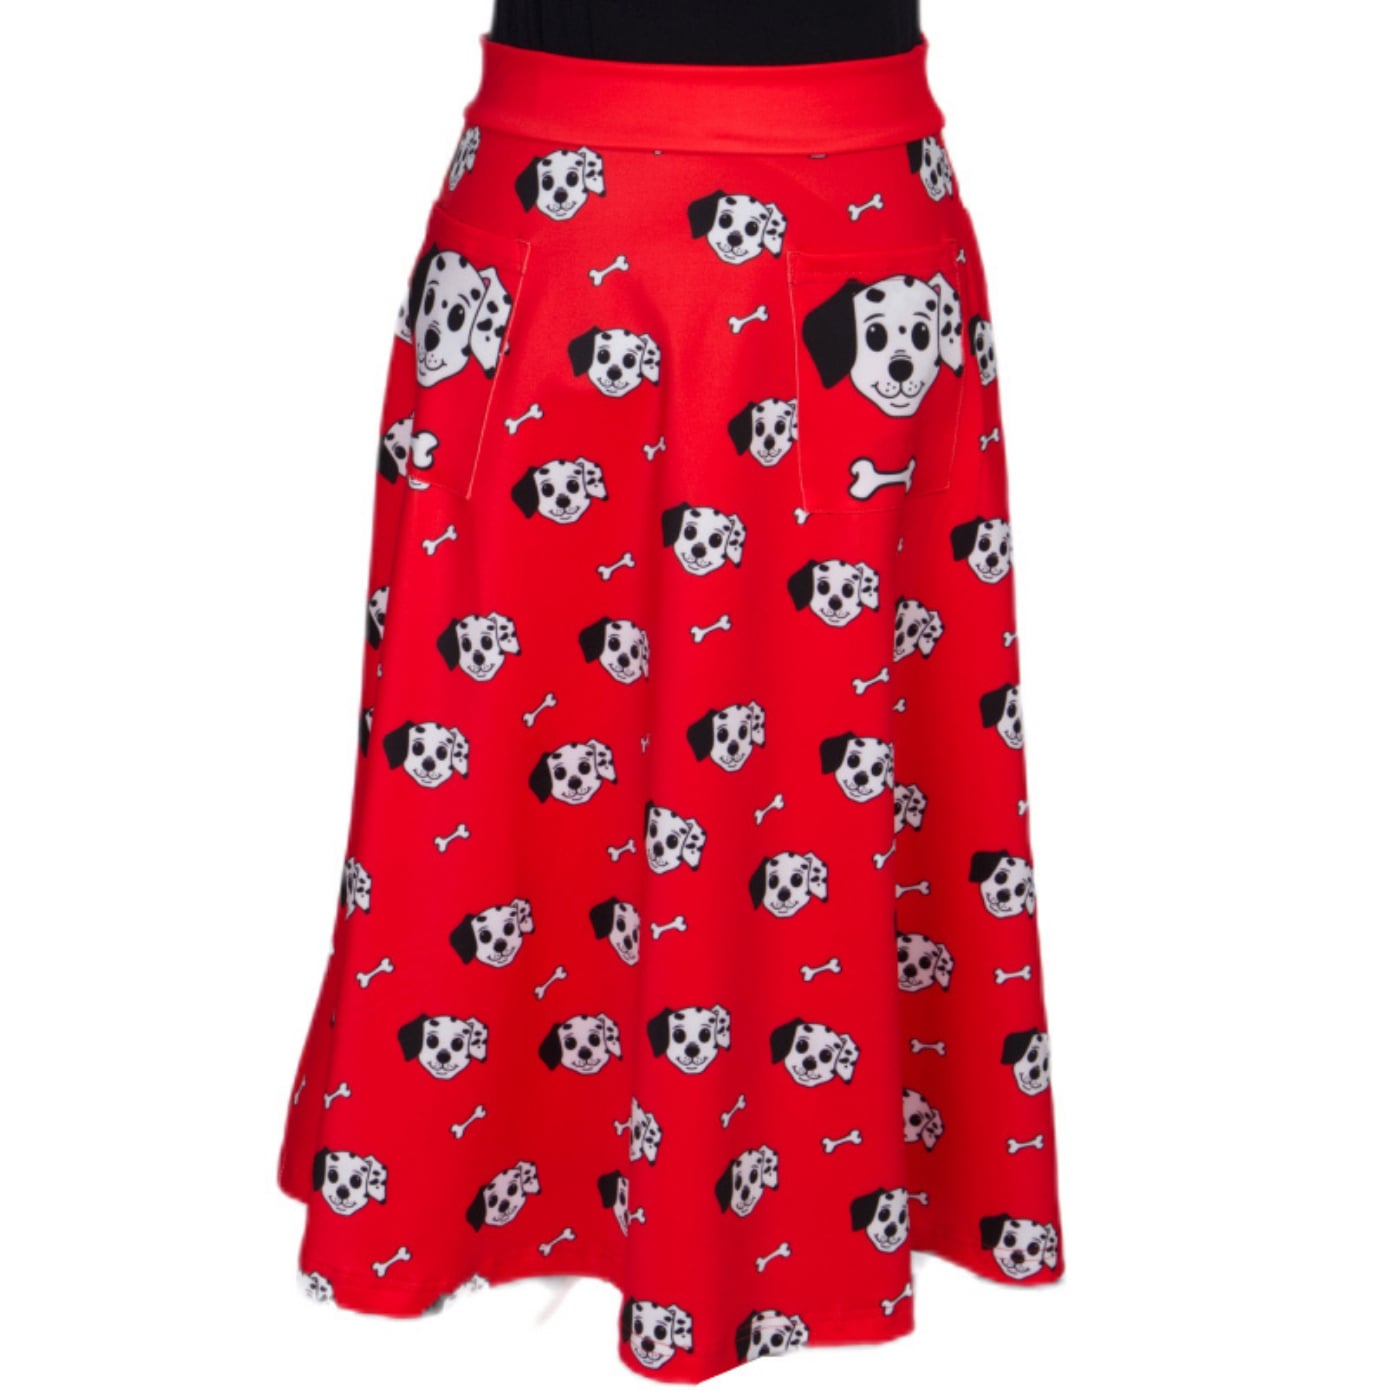 Puppy Love Original Skirt by RainbowsAndFairies.com.au (Dalmation - Dog Bone - Fire Engine Red - Kitsch - Aline Skirt With Pockets - Vintage Inspired) - SKU: CL_OSKRT_PUPPY_ORG - Pic-06